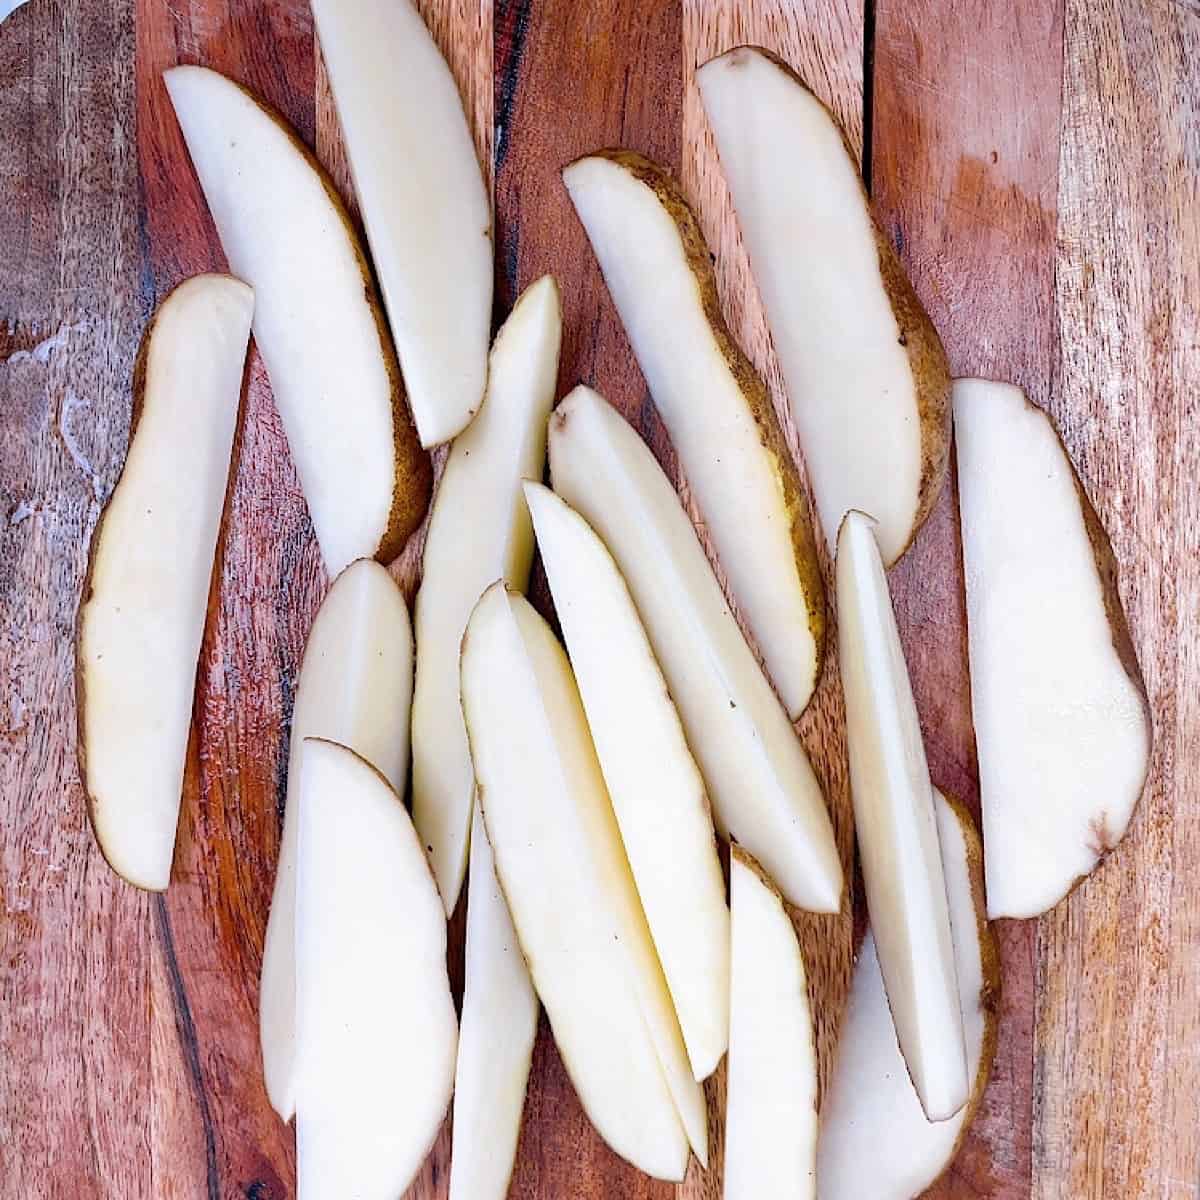 Raw potatoes cut on a wooden cutting board.